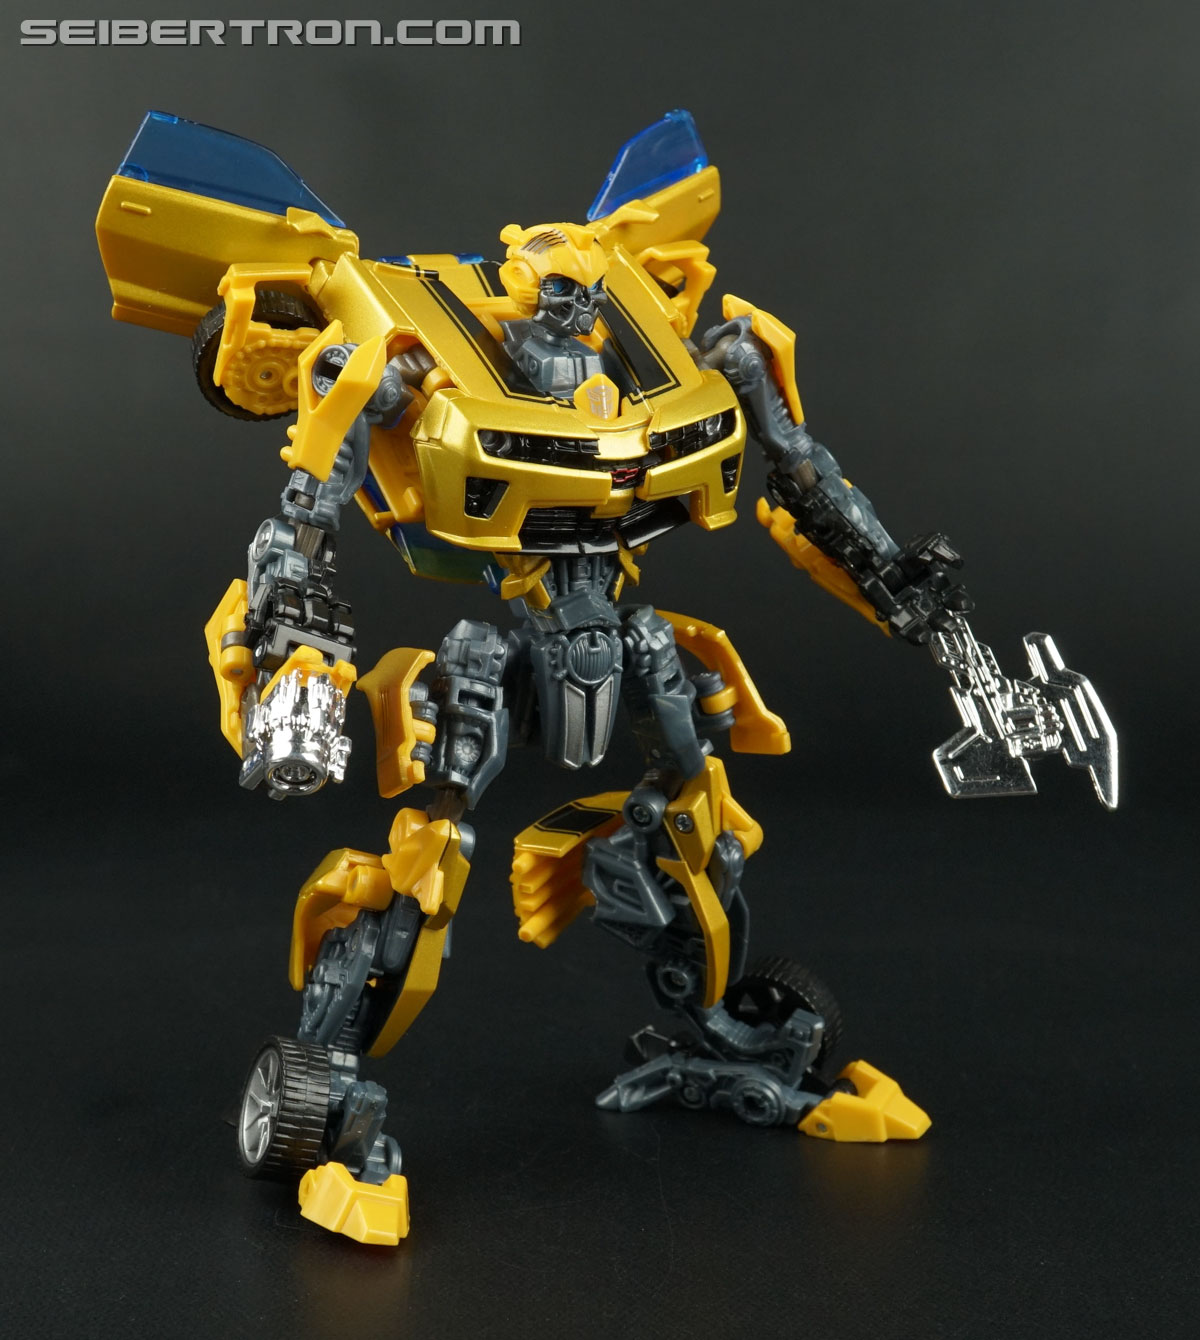 Transformers Takara Tomy: Movie Advanced Battle Blade Bumblebee (Image #88 of 111)